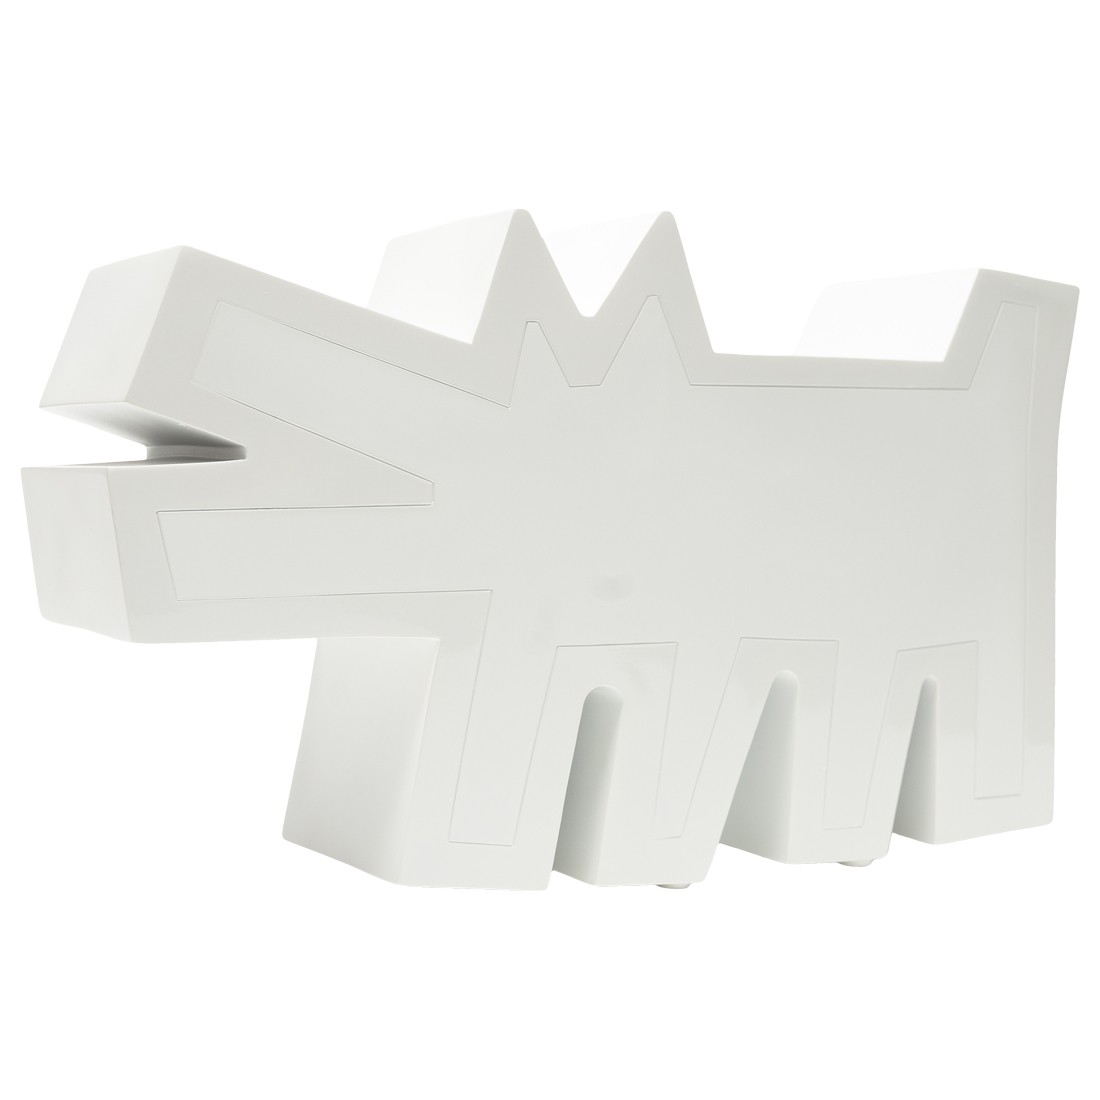 Medicom Keith Haring Barking Dog White Ver. Statue (white)